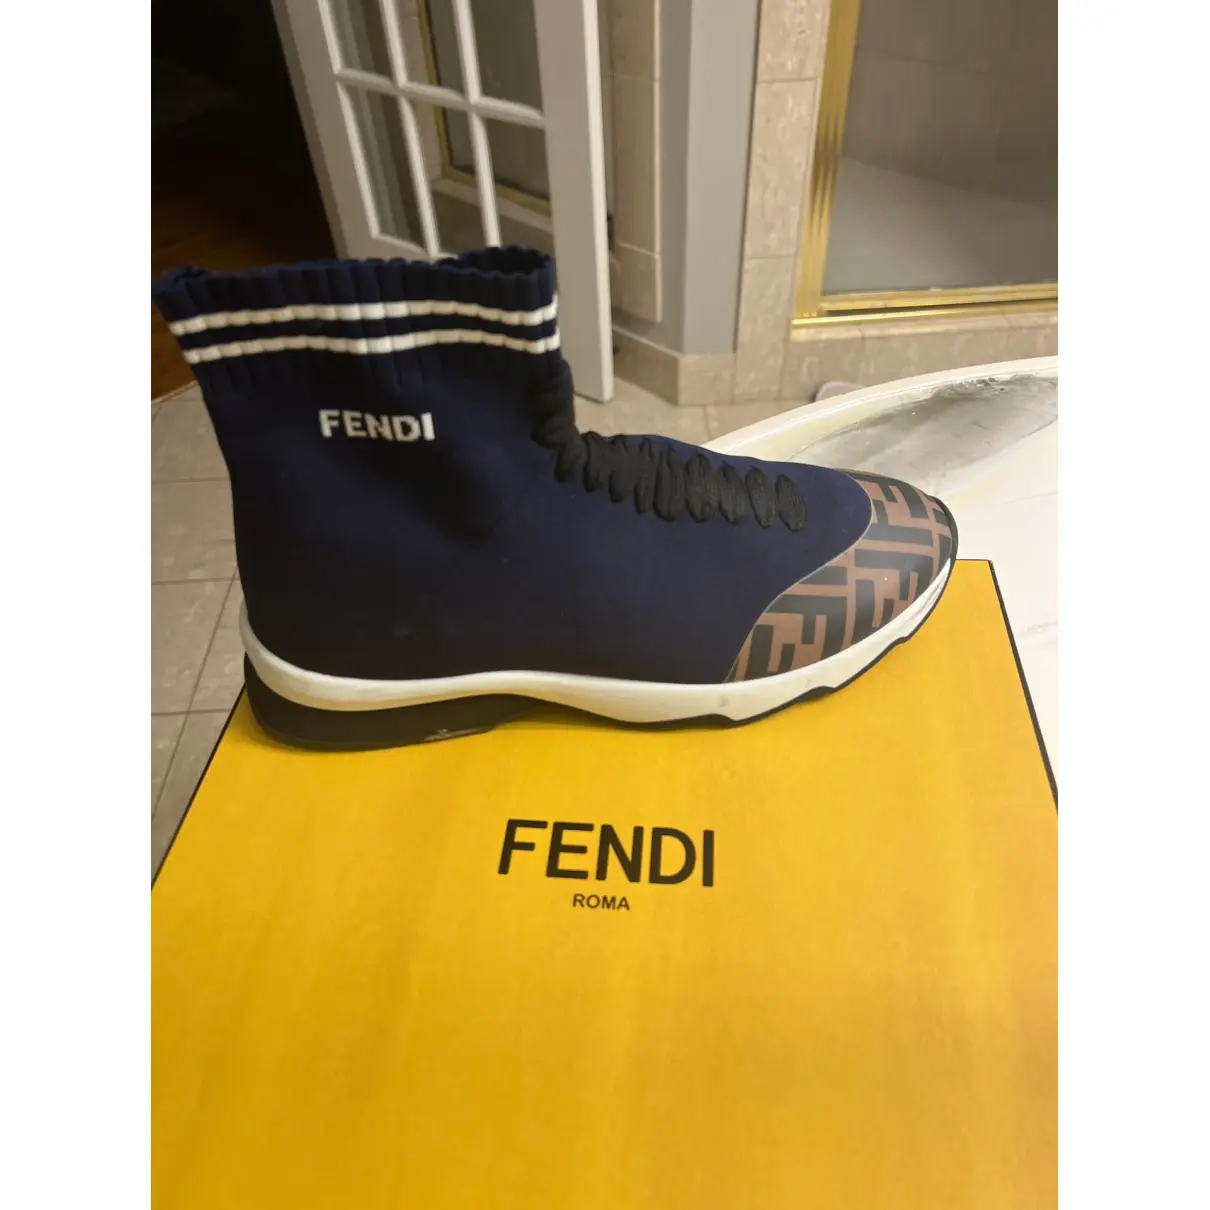 Buy Fendi Cloth high trainers online